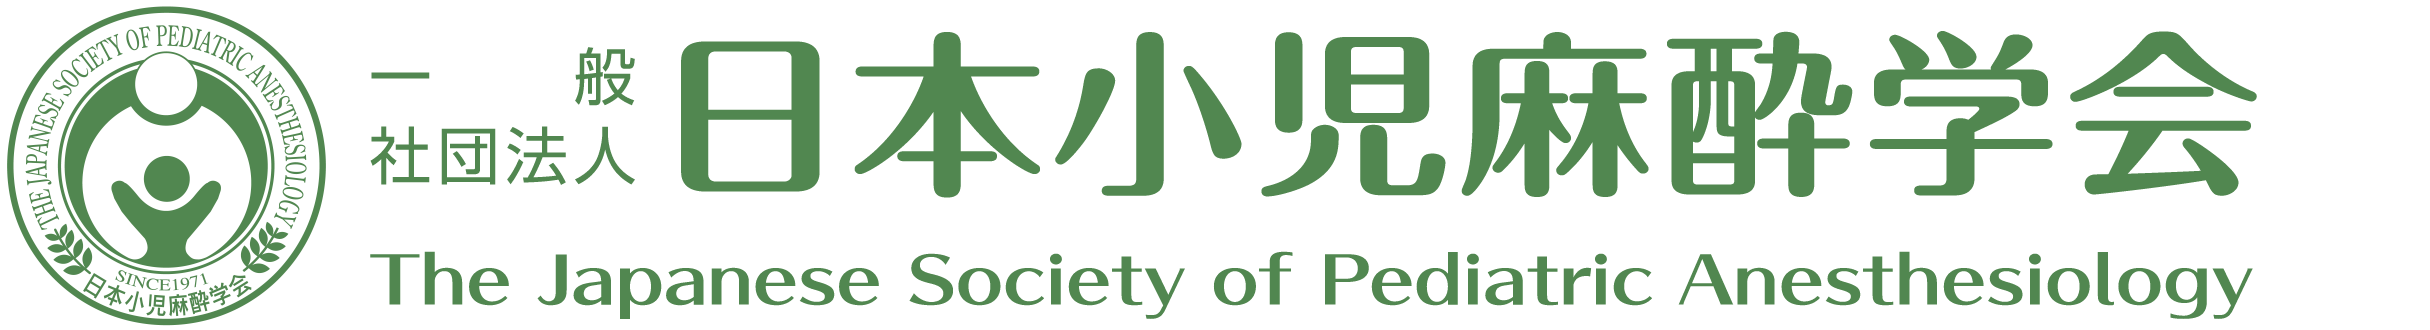 jspa_logo.png